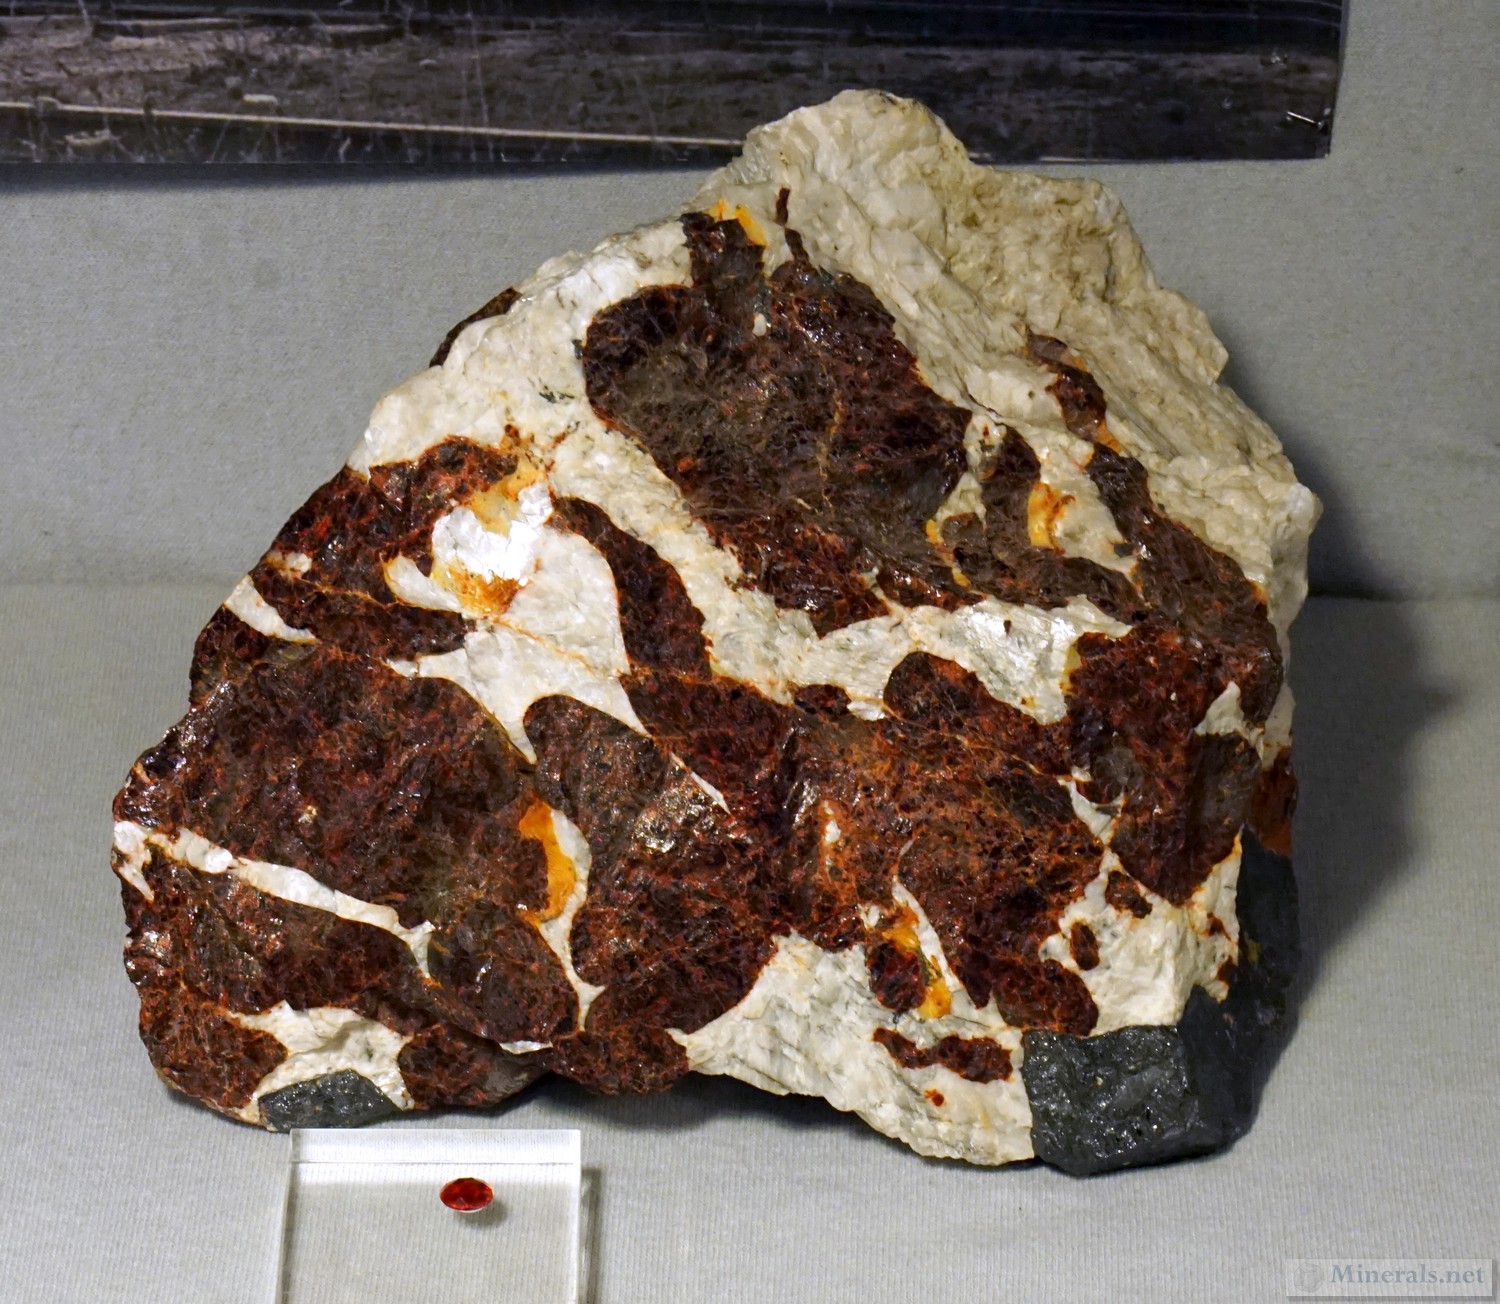 Minerals.net | Mineral News | Zincite Exhibit at Franklin, New Jersey